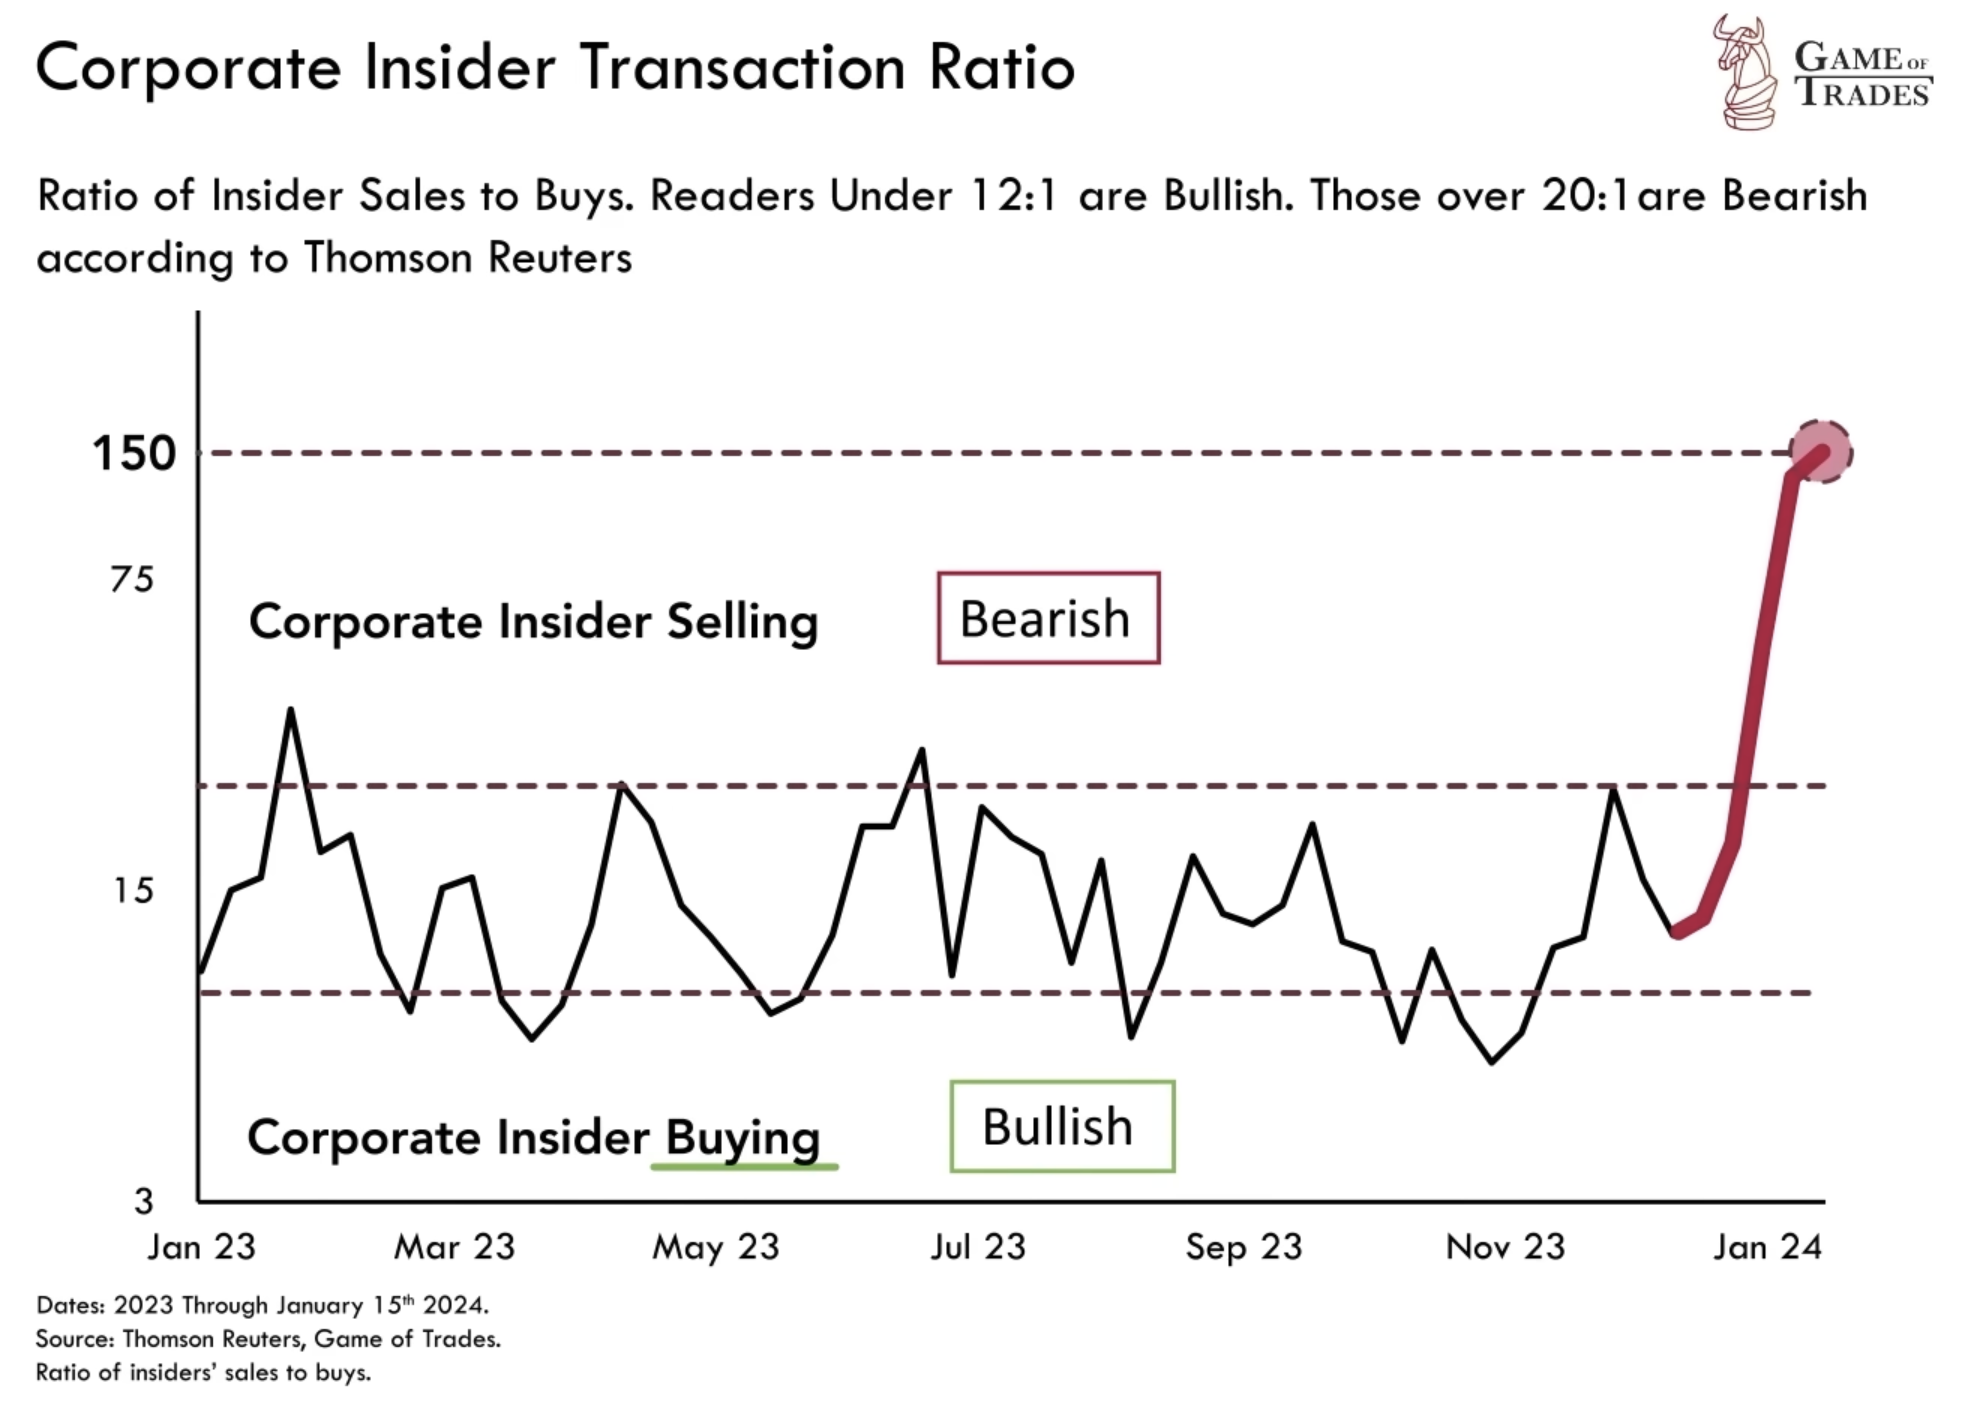 Corporate Insider Selling Transaction Ratio Data